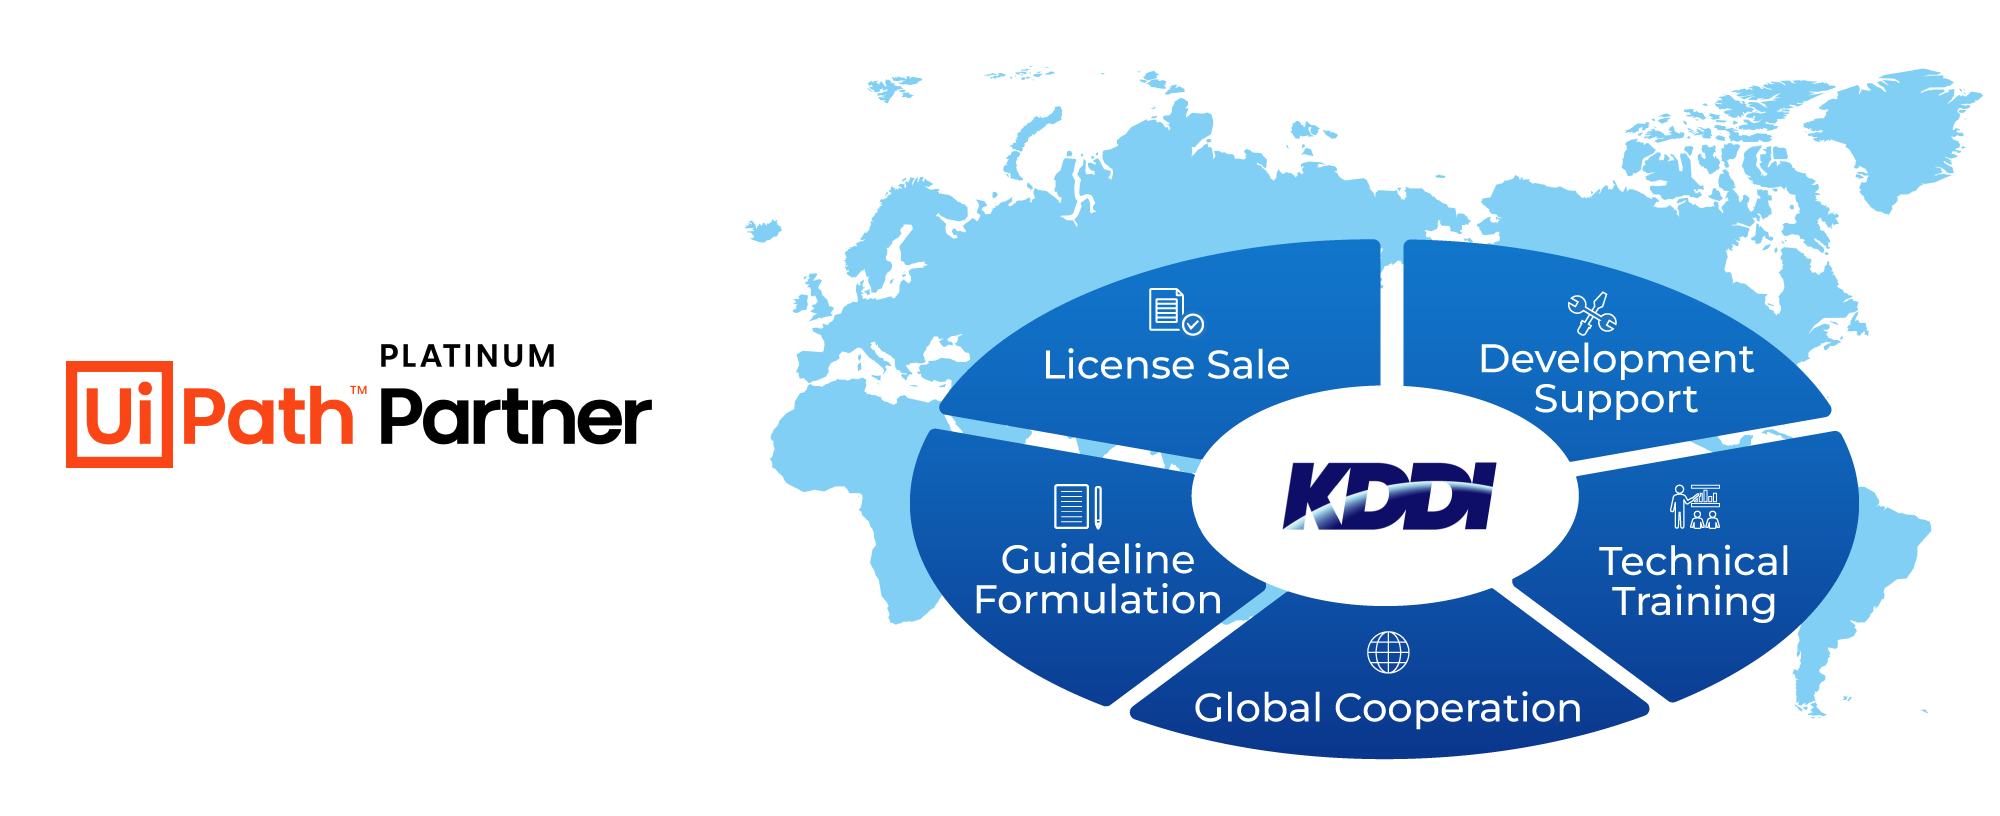 License sale, Guideline Formulation, Global Cooperation, Technical Training, Development Support